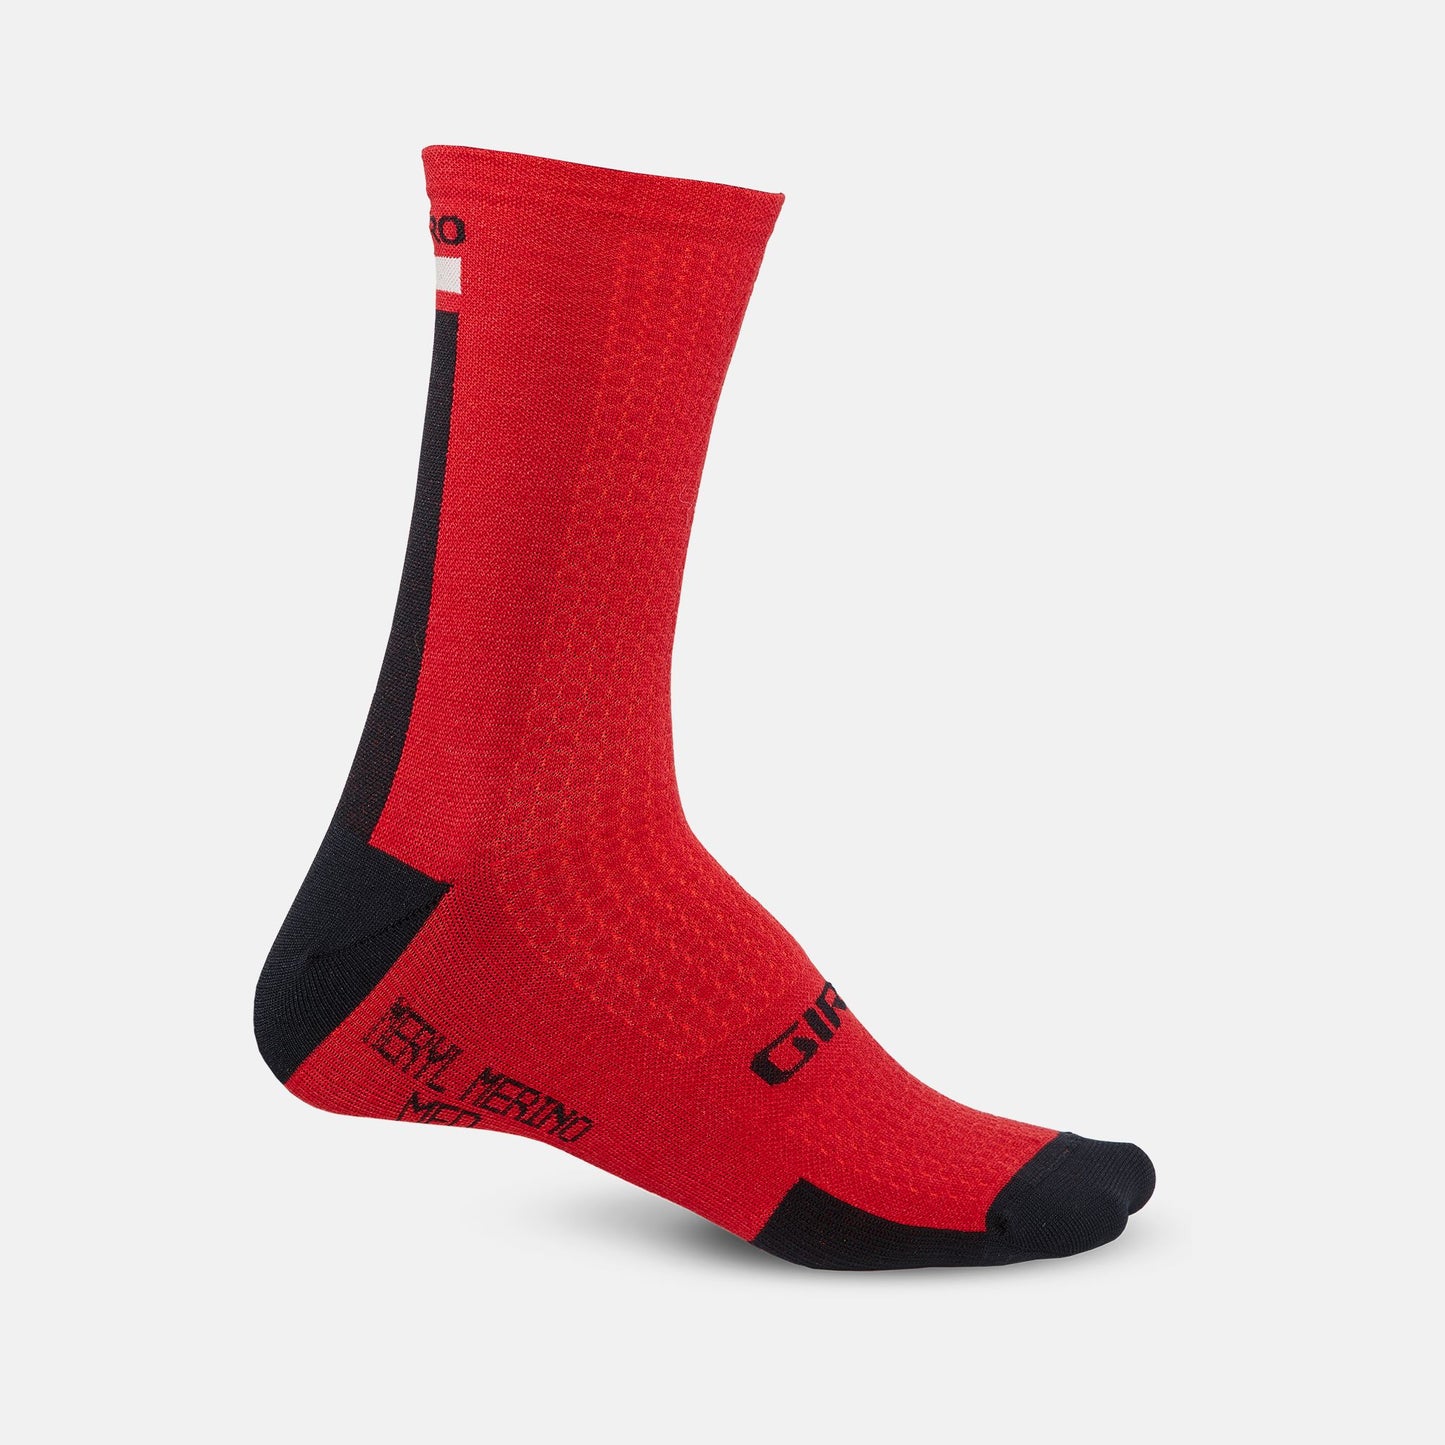 Giro HRc+ Merino Wool Socks - Dark Red/Black/Grey - Size XL